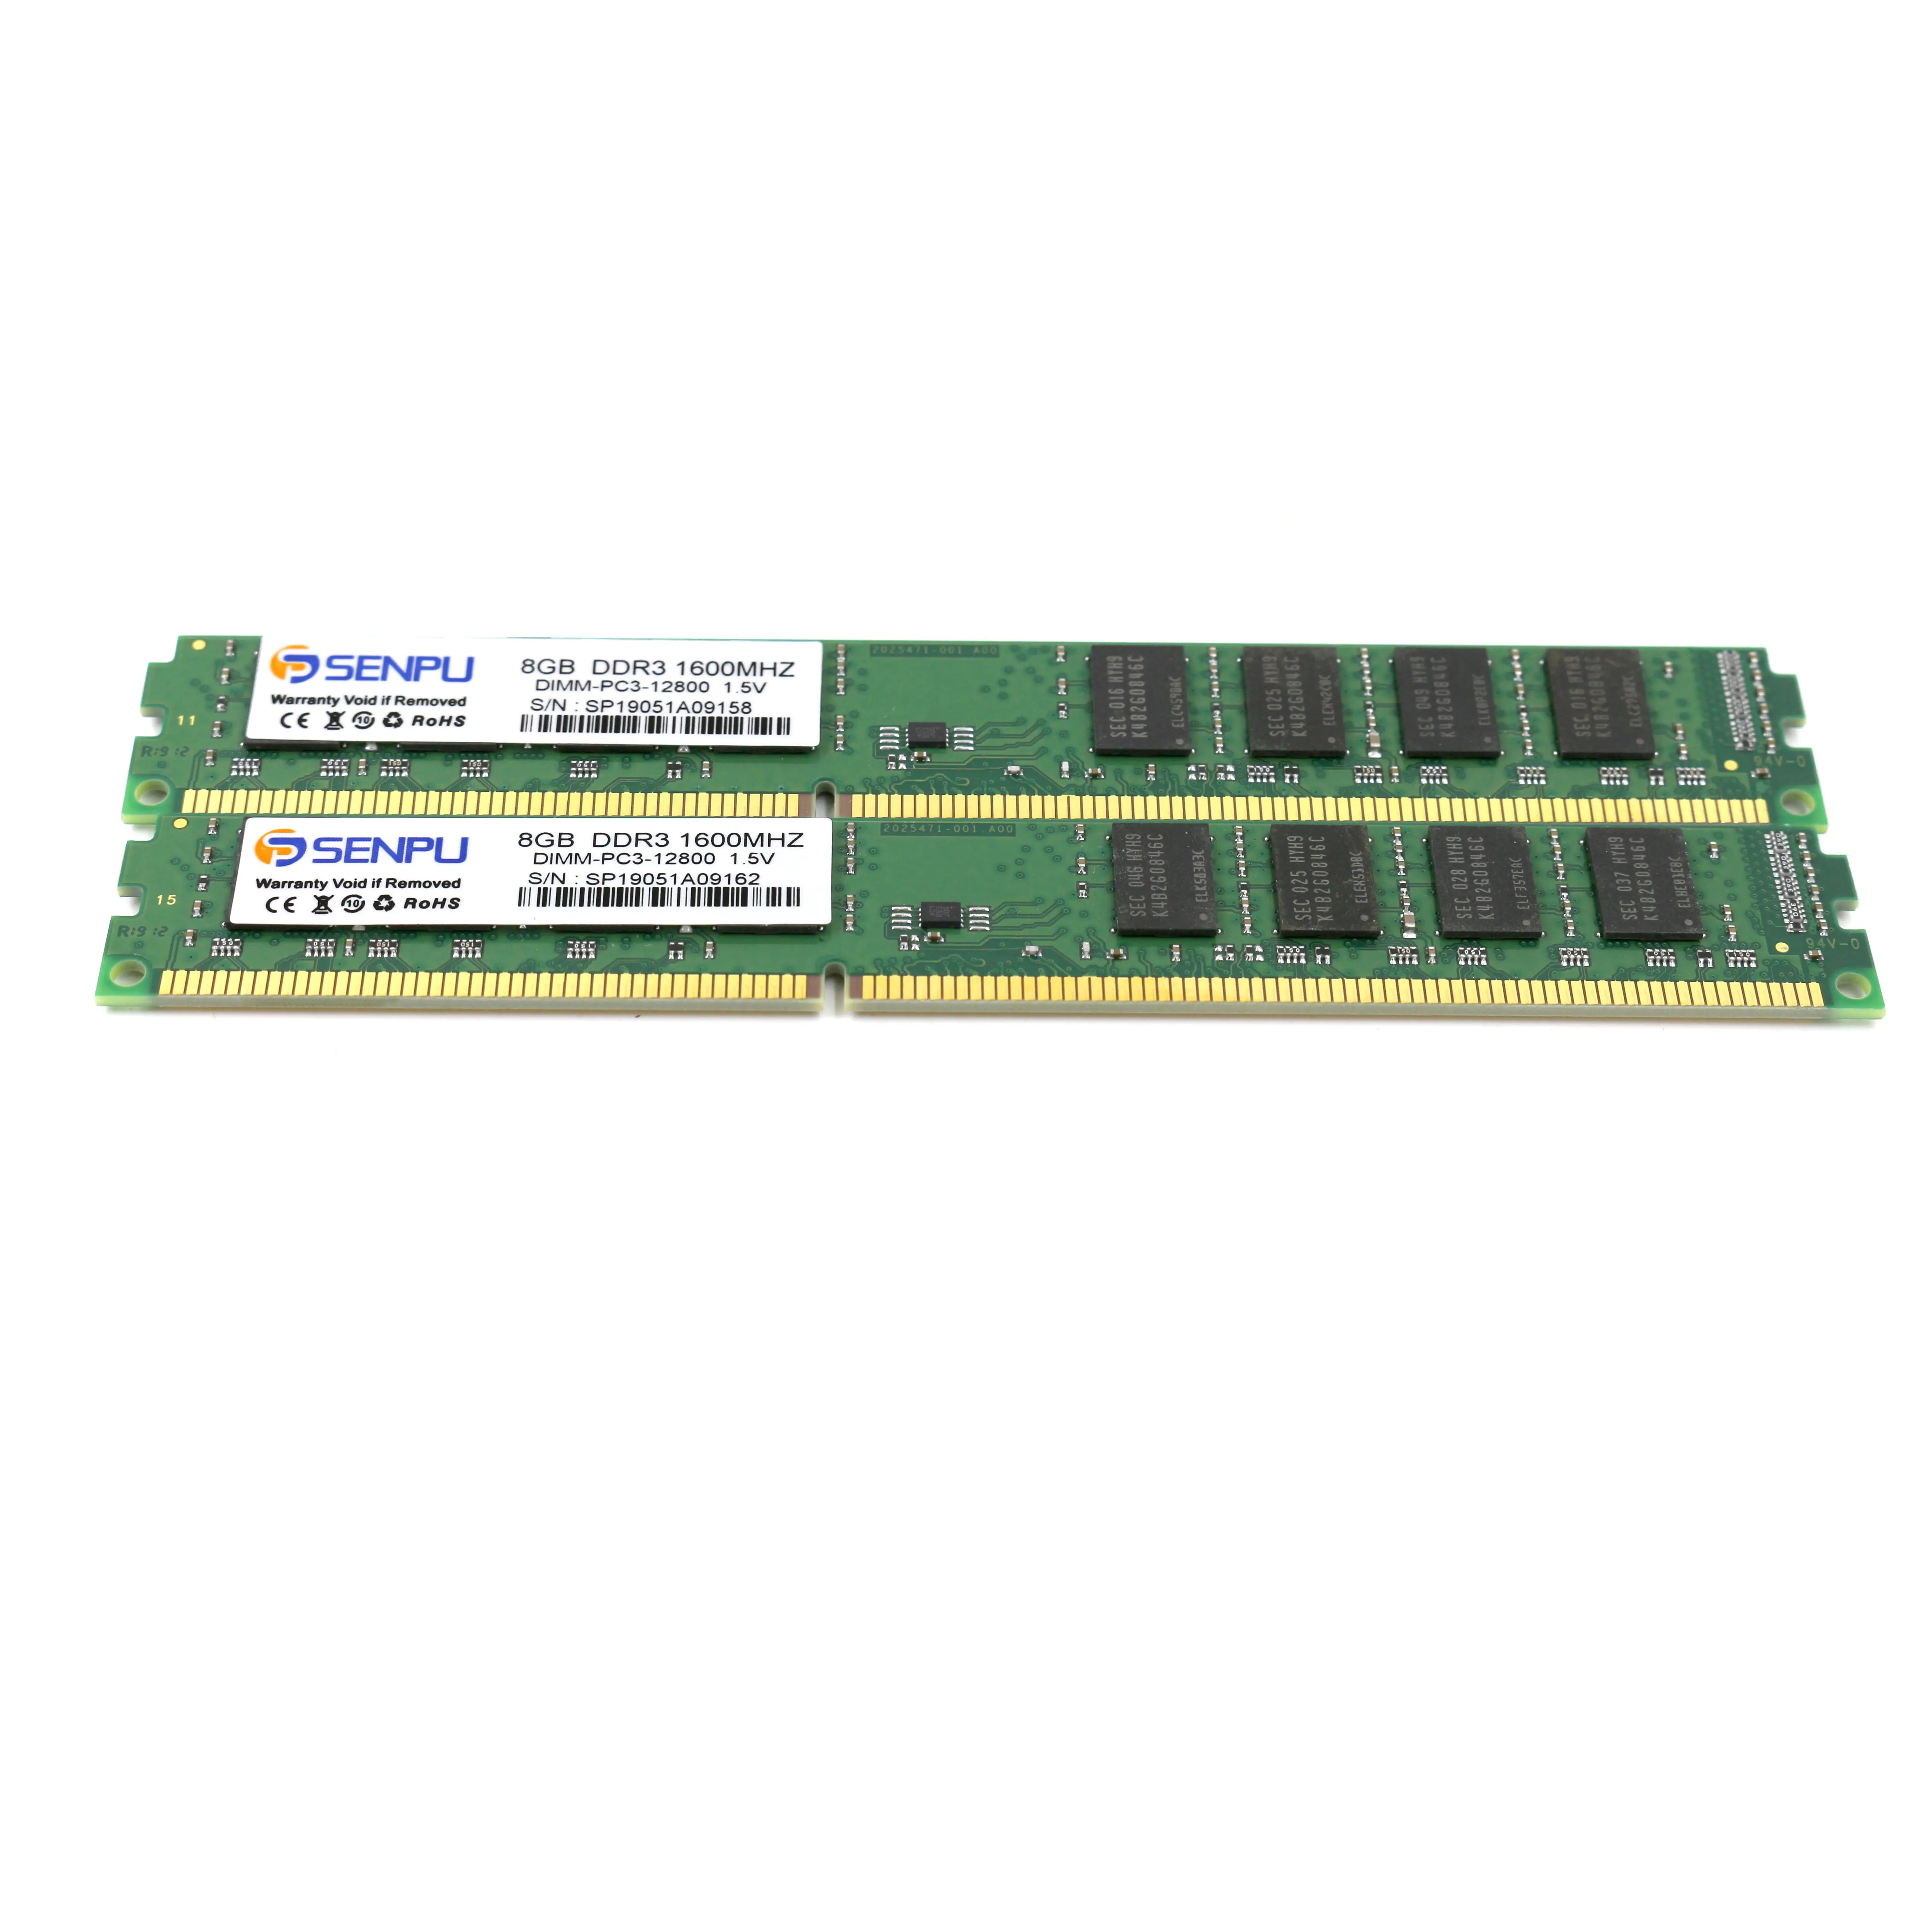 China Fabricante Ram ddr3 PC12800 8 mhz 1600 gb 1333mhz Memória Ram Para Desktop